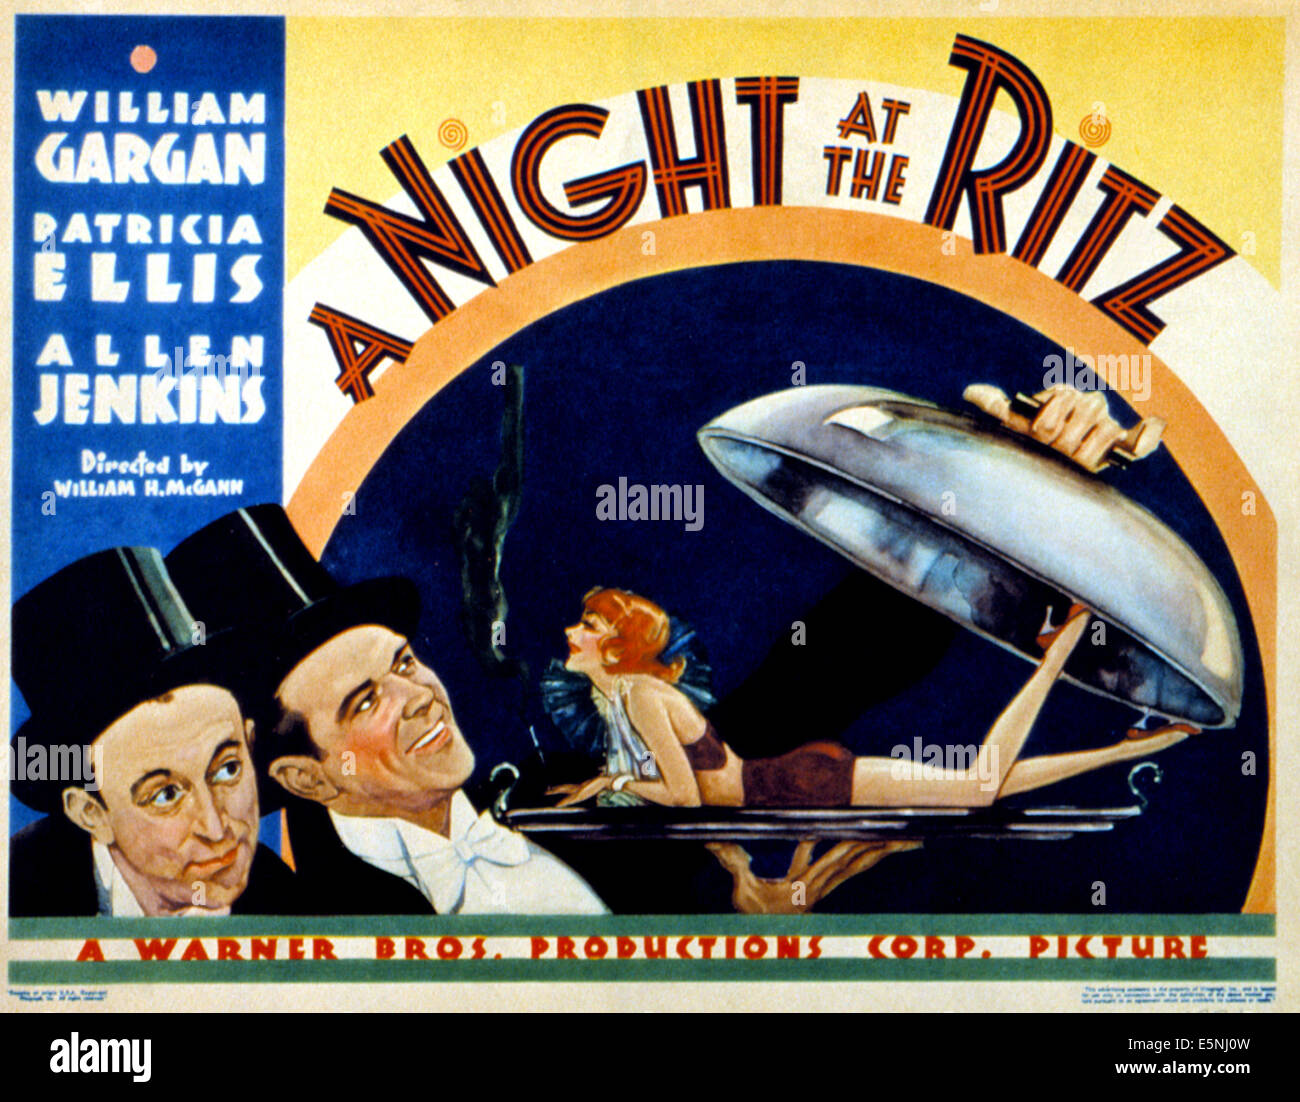 A NIGHT AT THE RITZ, William Gargan, 1935. Stock Photo